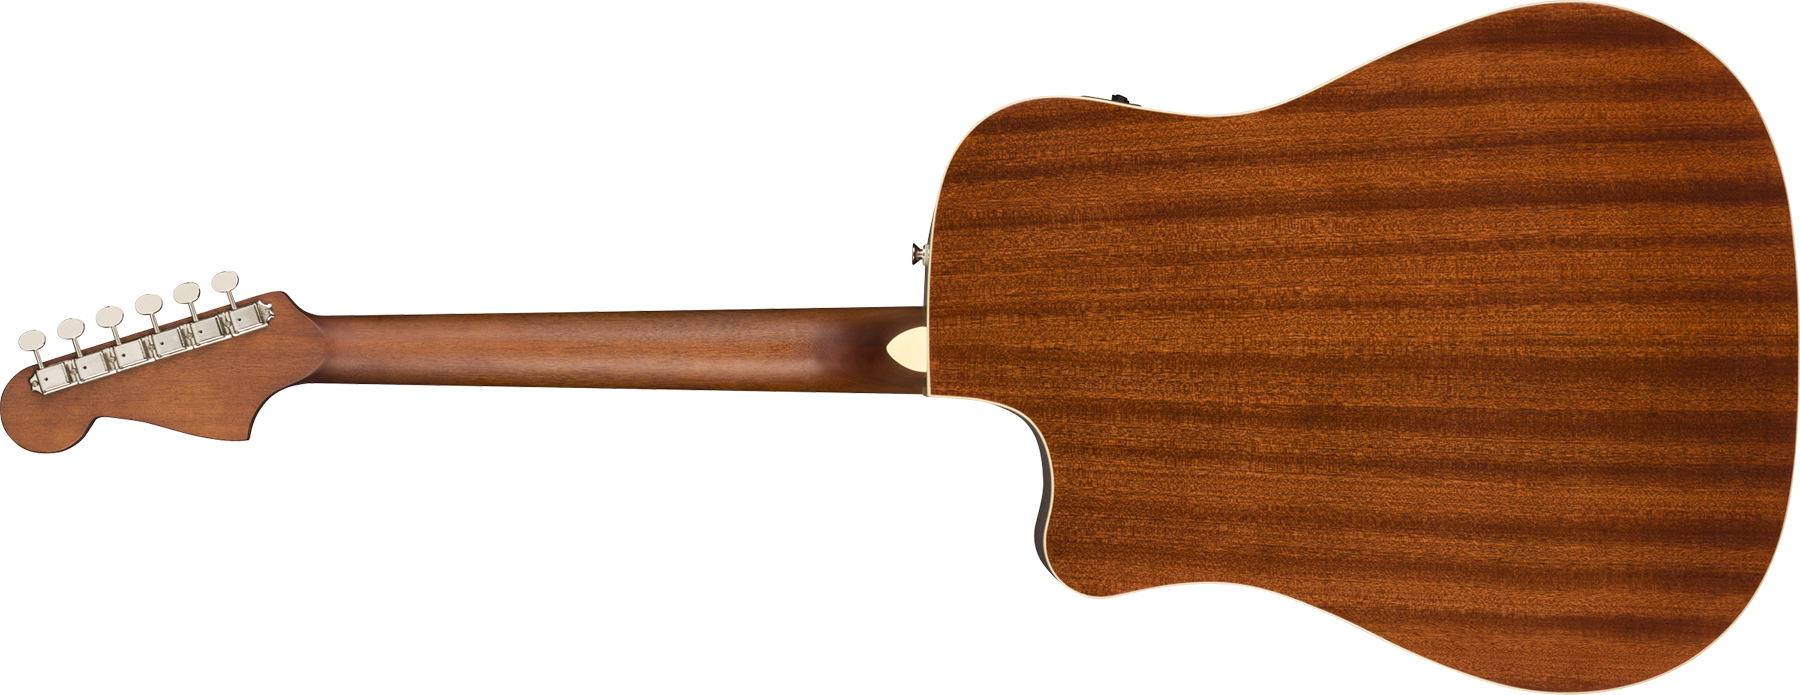 Fender Redondo California Player Dreadnought Cw Epicea Acajou Wal - Natural - Electro acoustic guitar - Variation 1